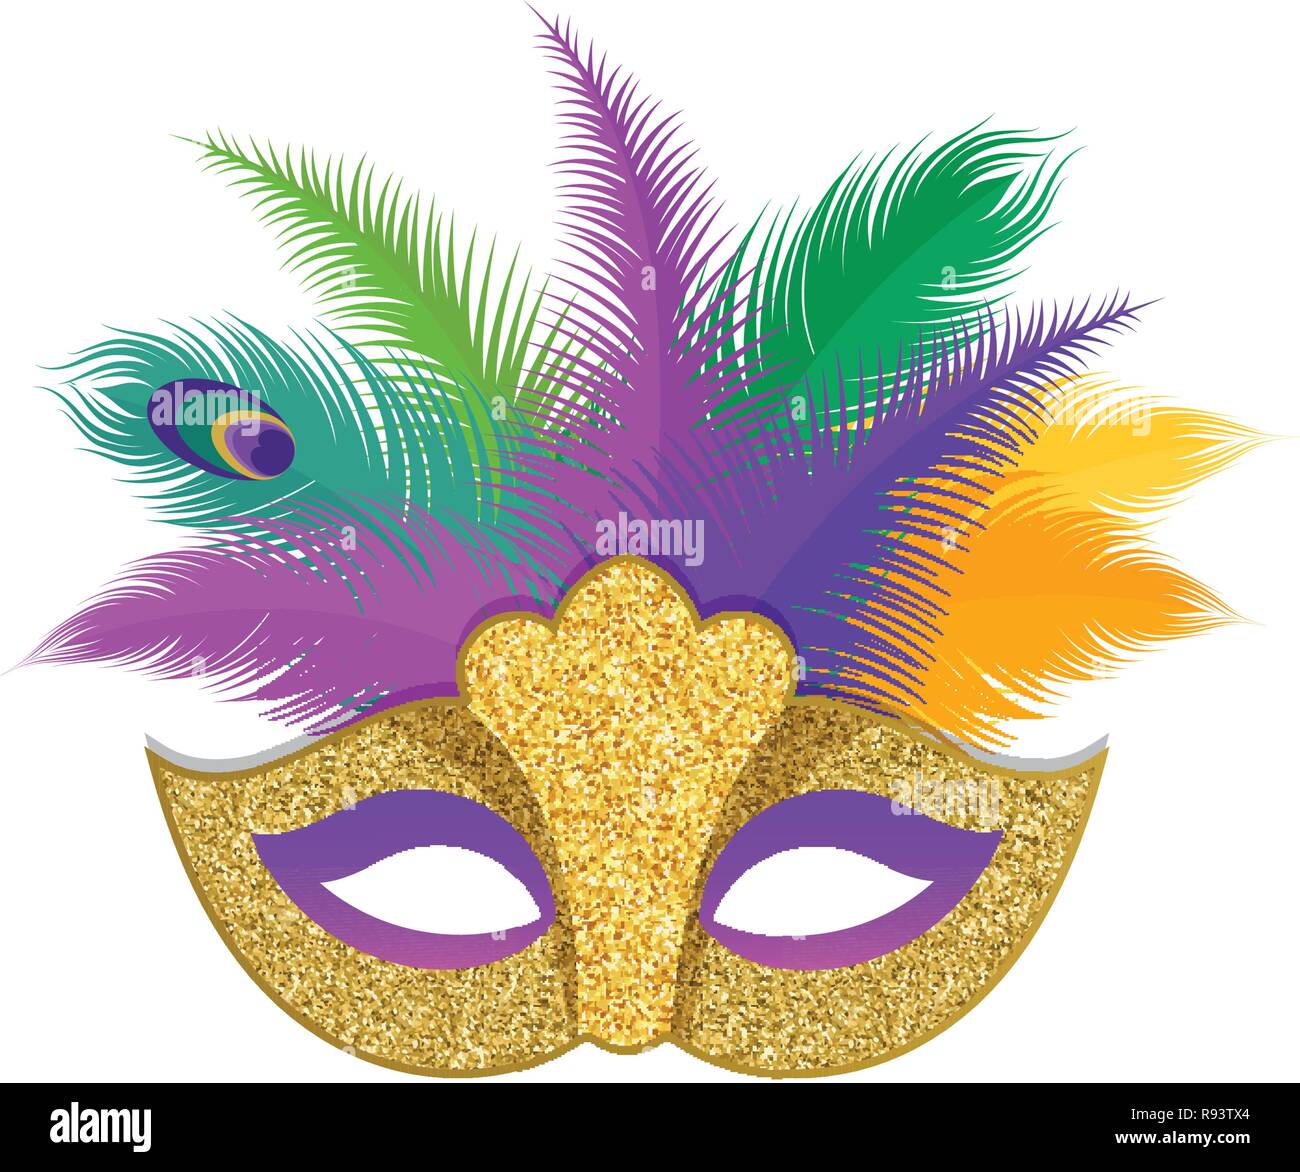 Brazilian Carnival, music festival, masquerade flyer template Stock Vector